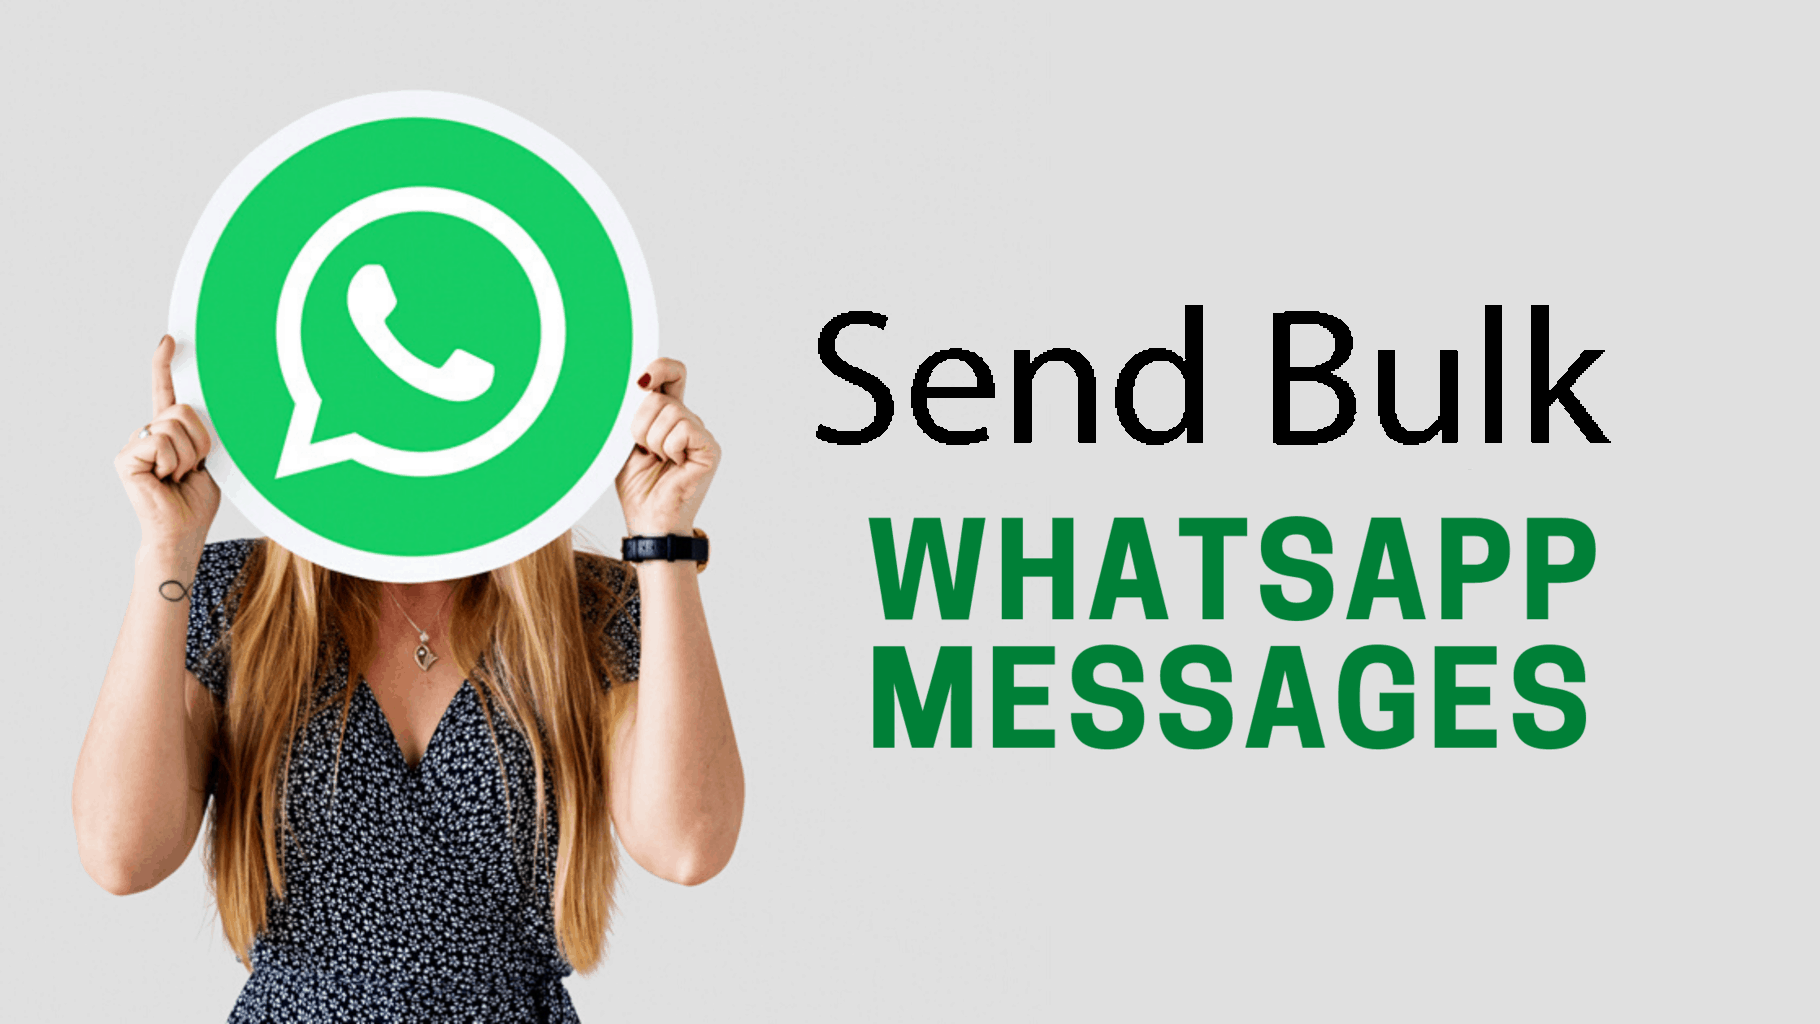 How to Use WhatsApp Blast to Send Bulk WhatsApp Messages?